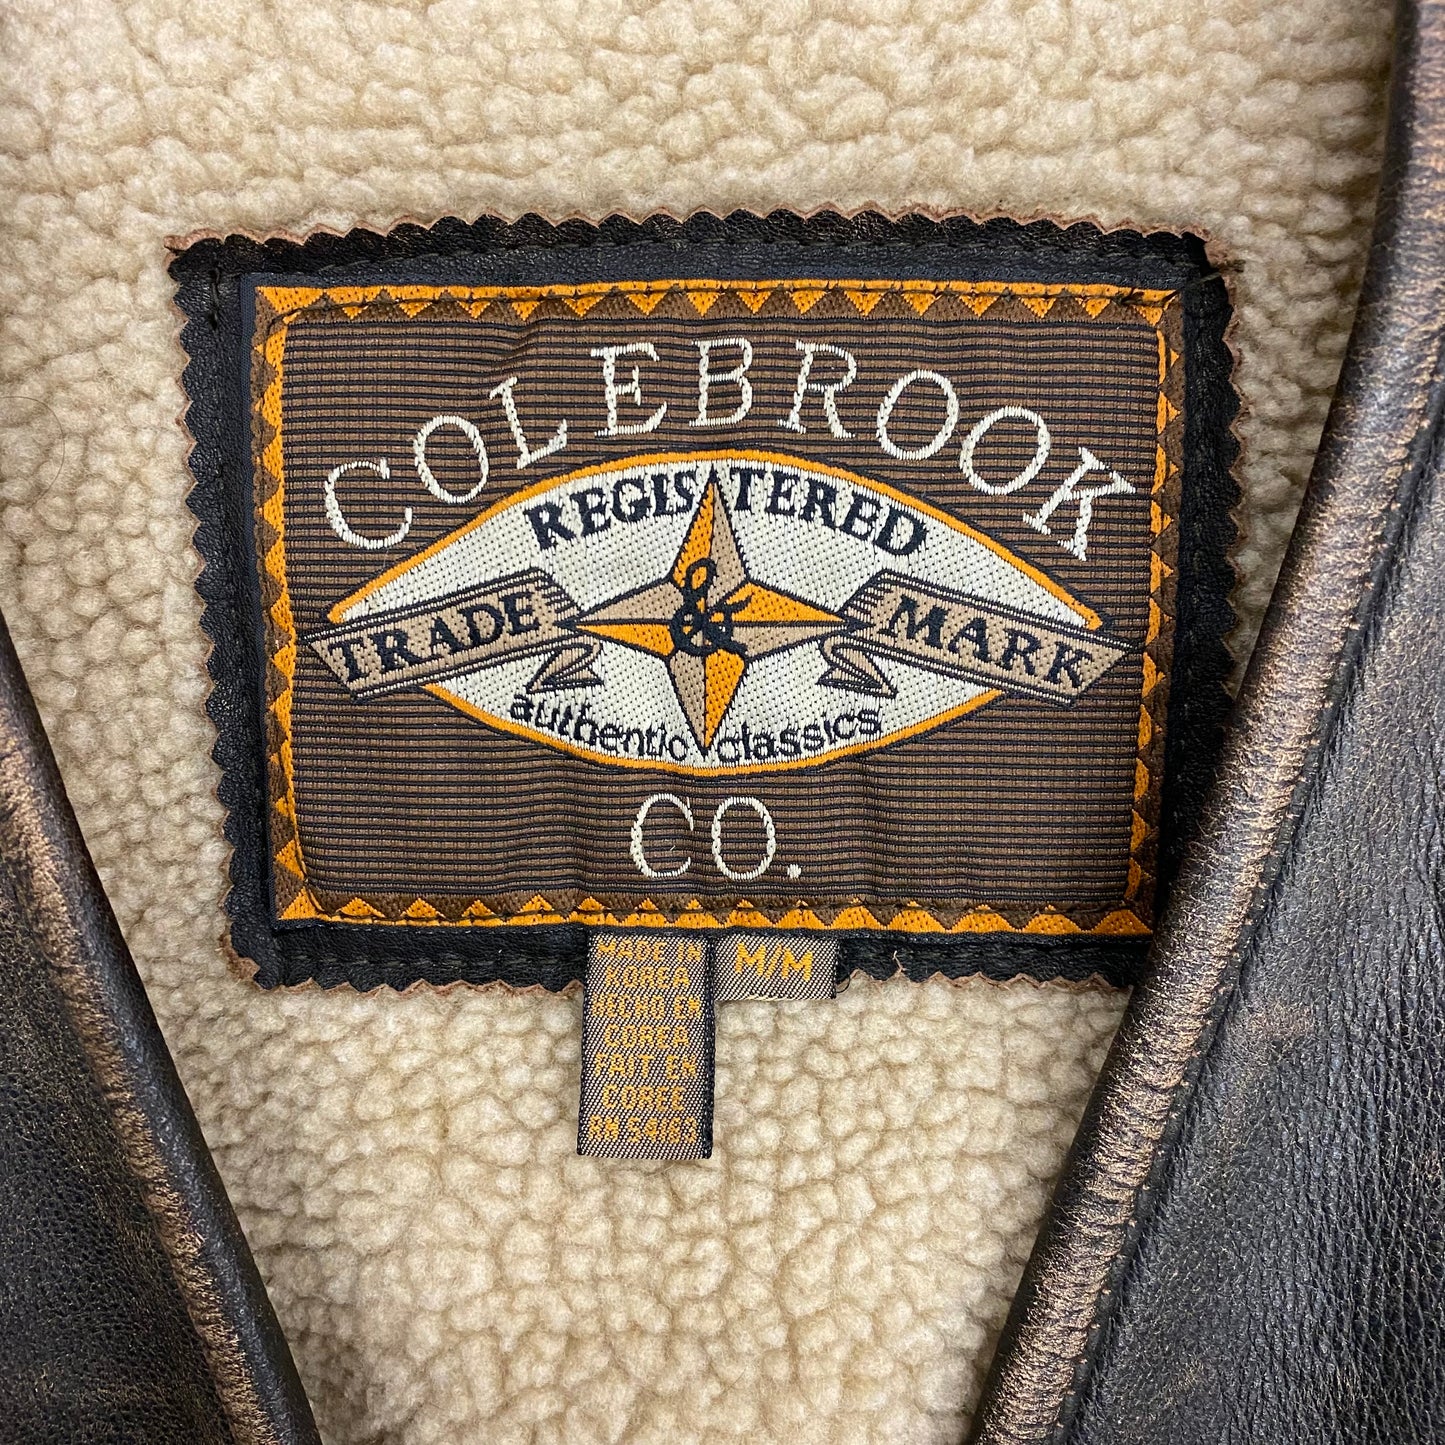 1980s Colebrook Co. Sherpa Lined Leather Vest - Size Medium